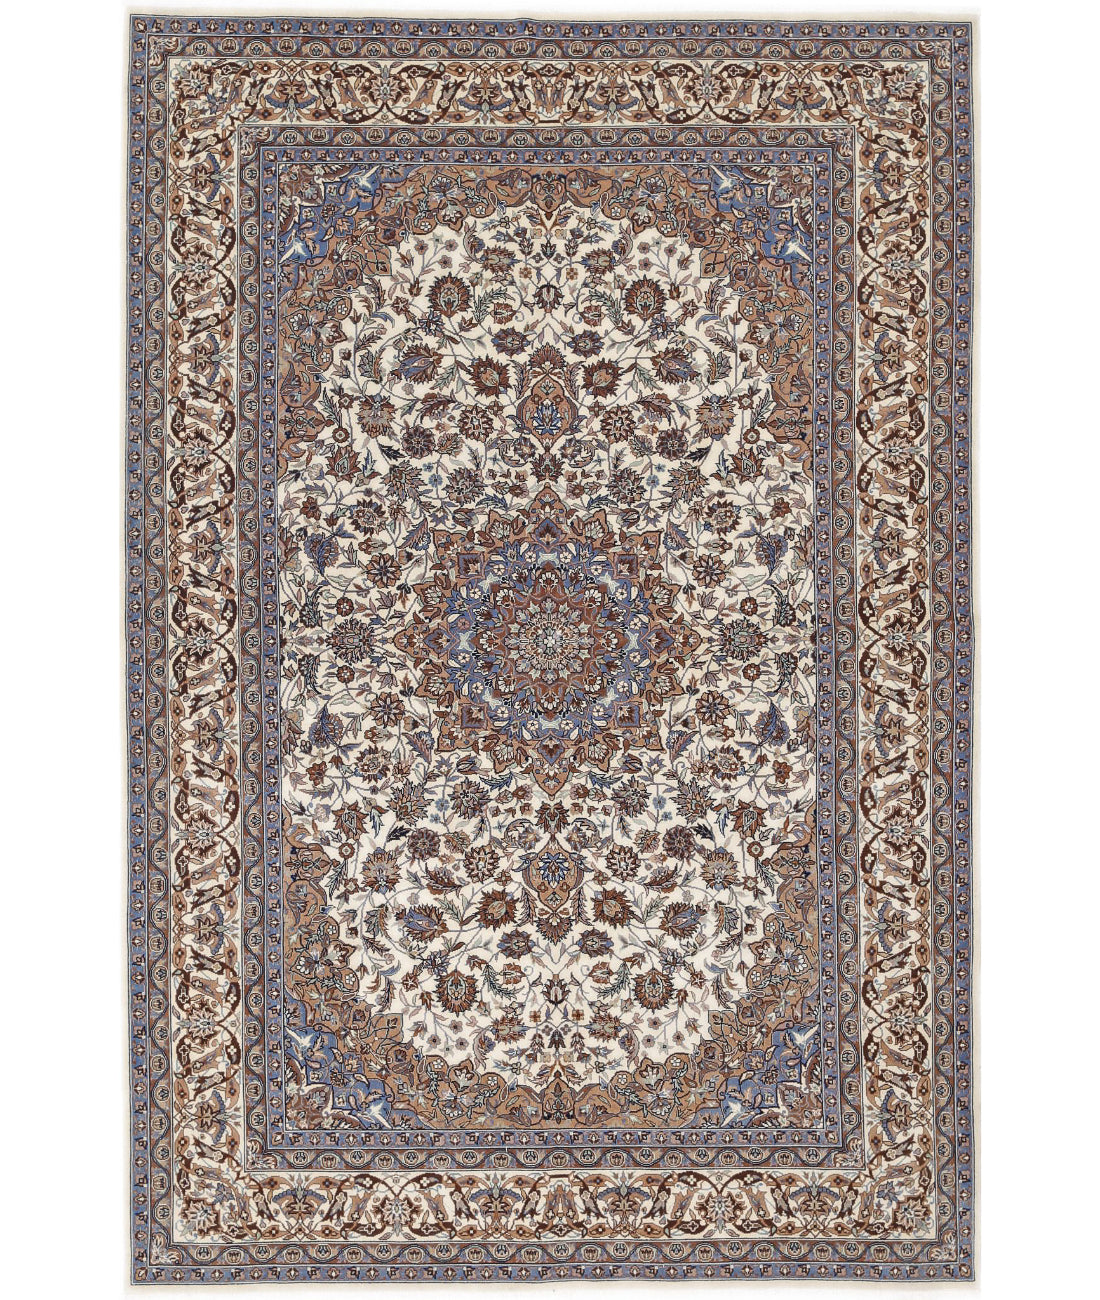 Heritage-hand-knotted-pak-persian-wool-rug-5025170.jpg